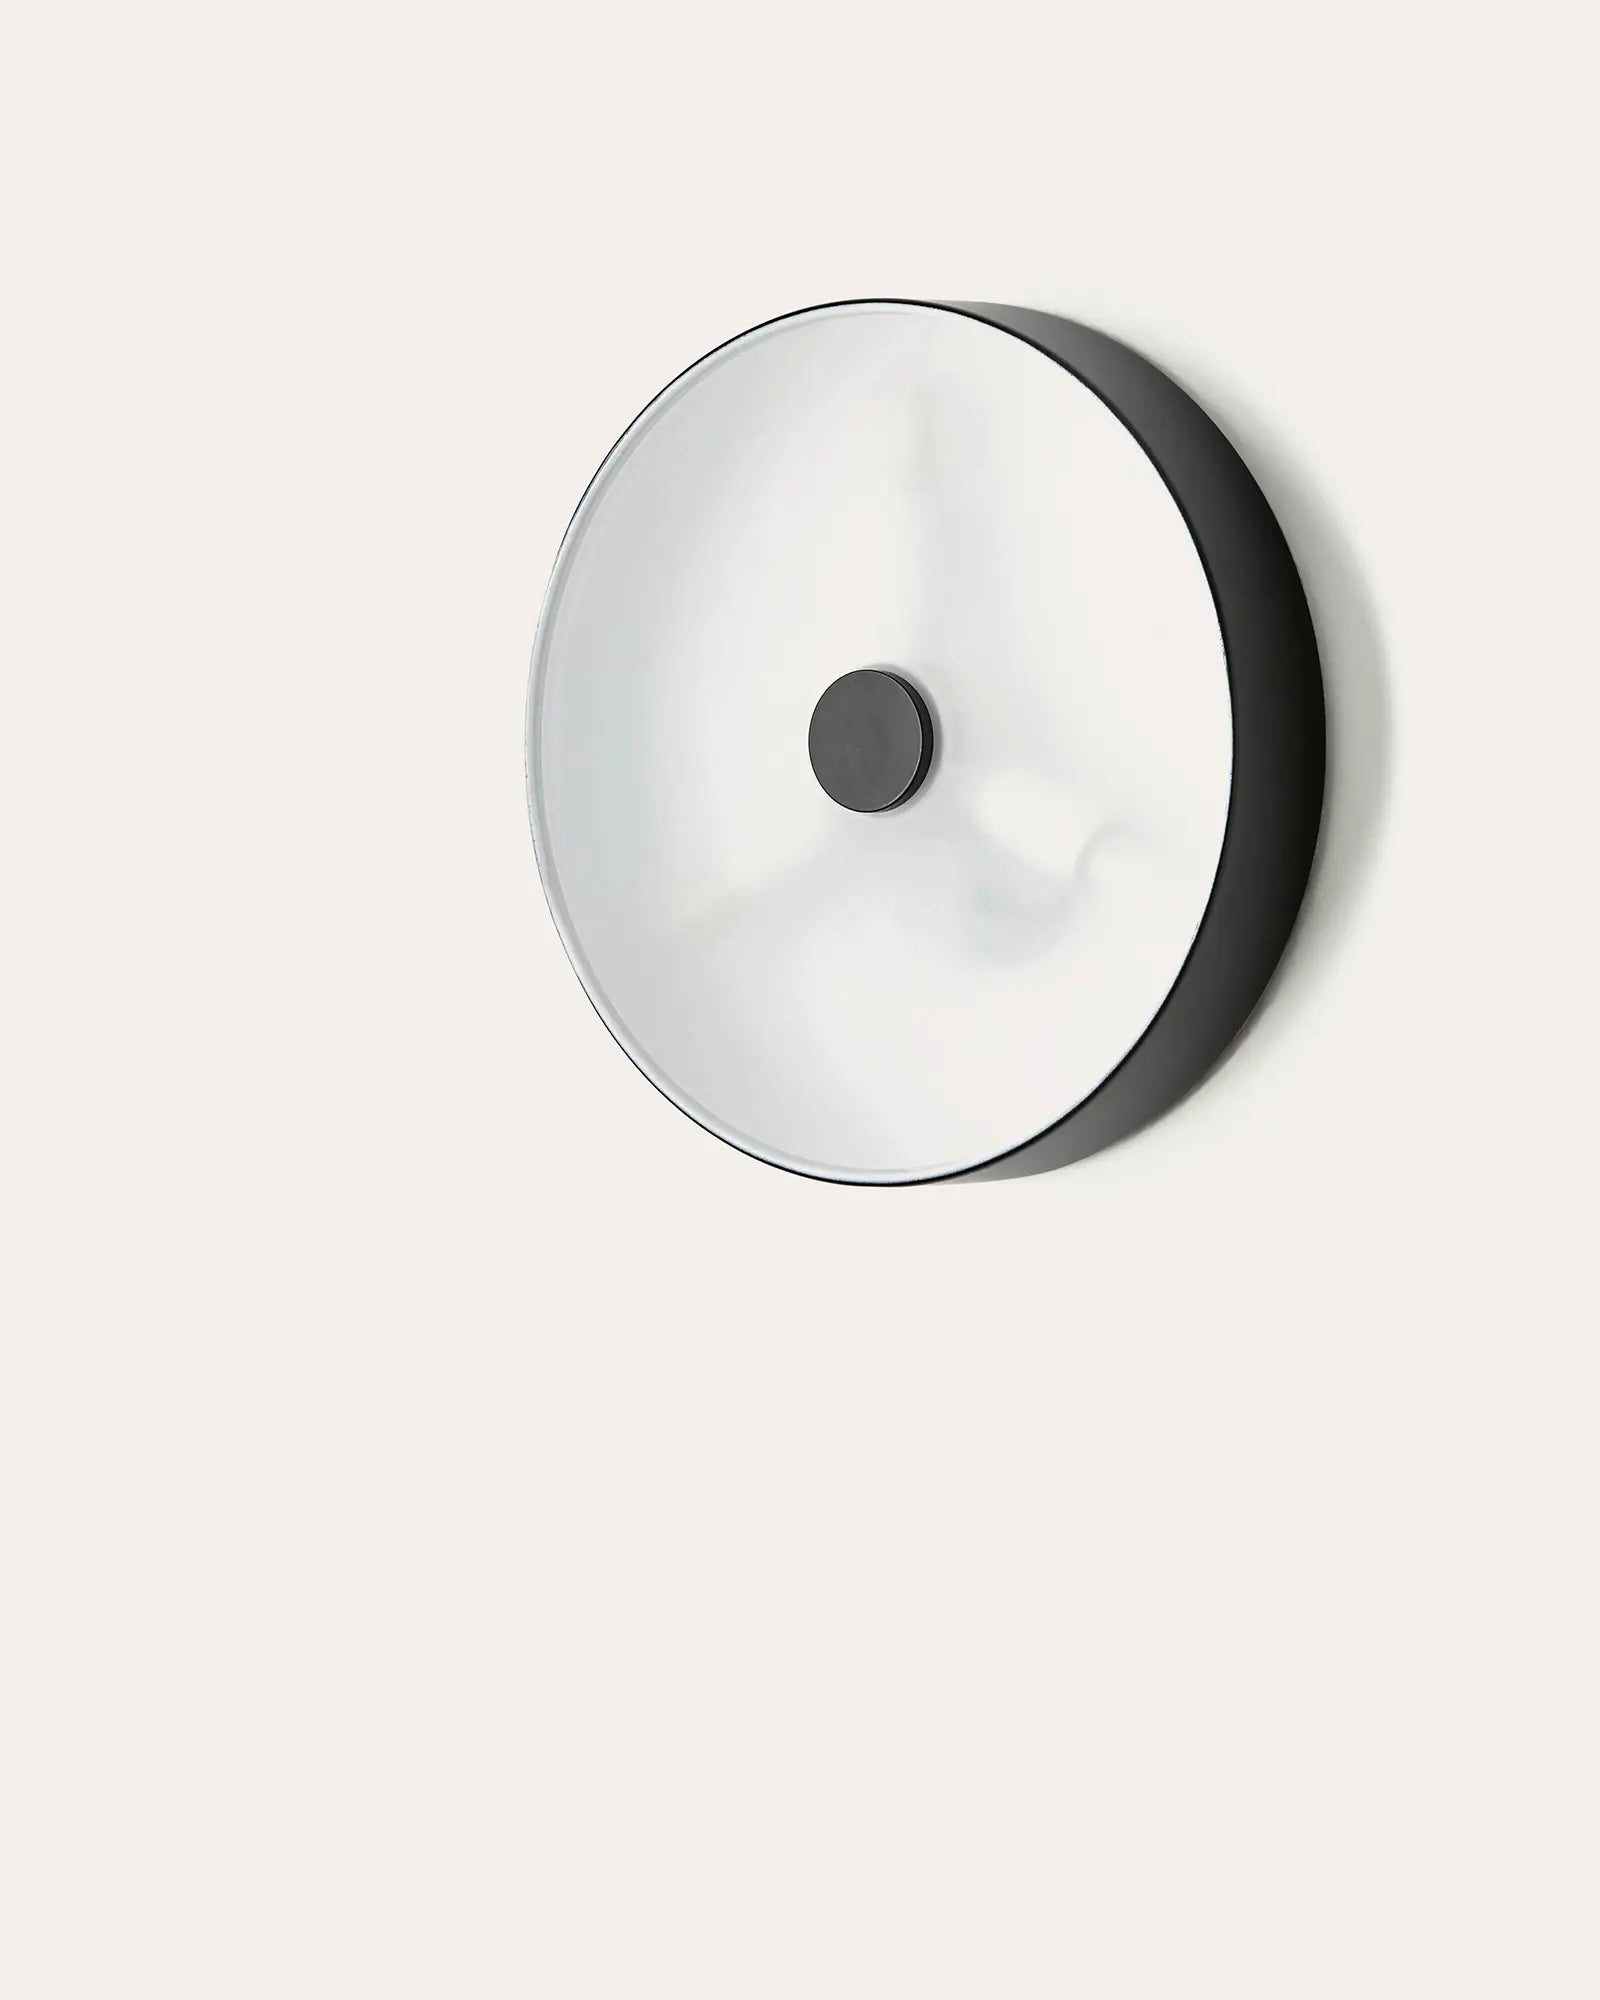 Ambor dish wall light with diffuser minimalistic contemporary product photo black